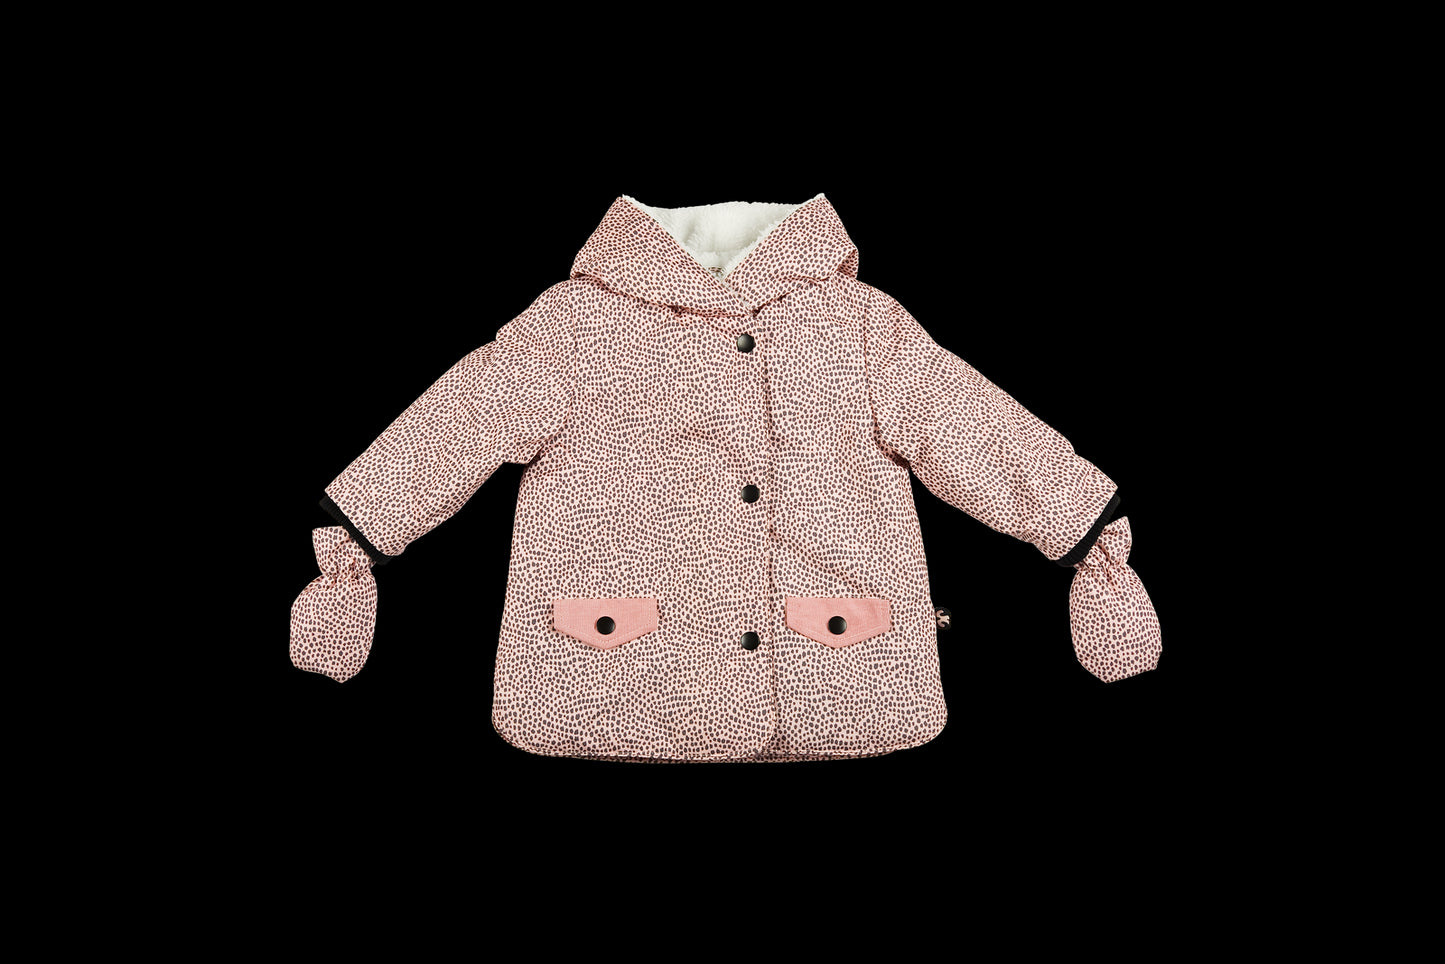 Jacheta de iarna pentru bebelusi cu manusi asortate - Ducksday - June